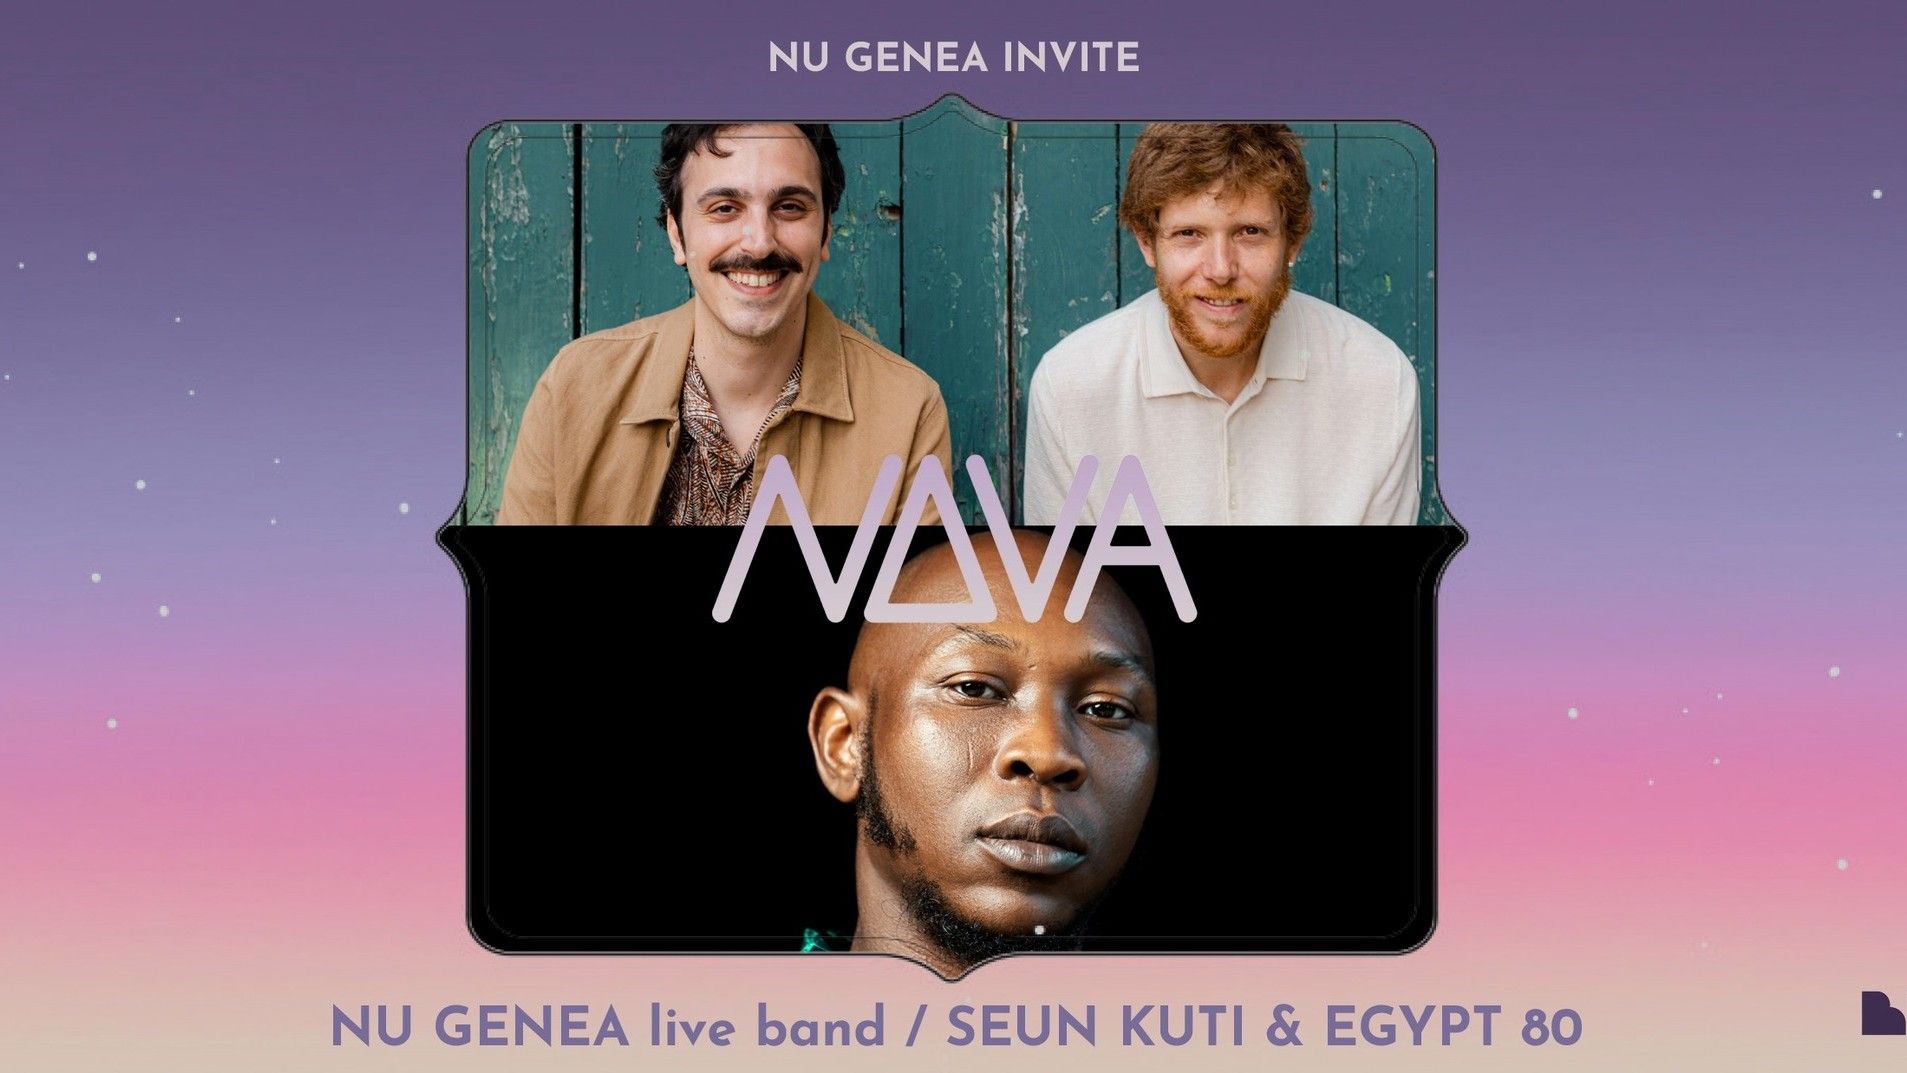 Nu Genea Live Band invite Seun Kuti & Egypt 80